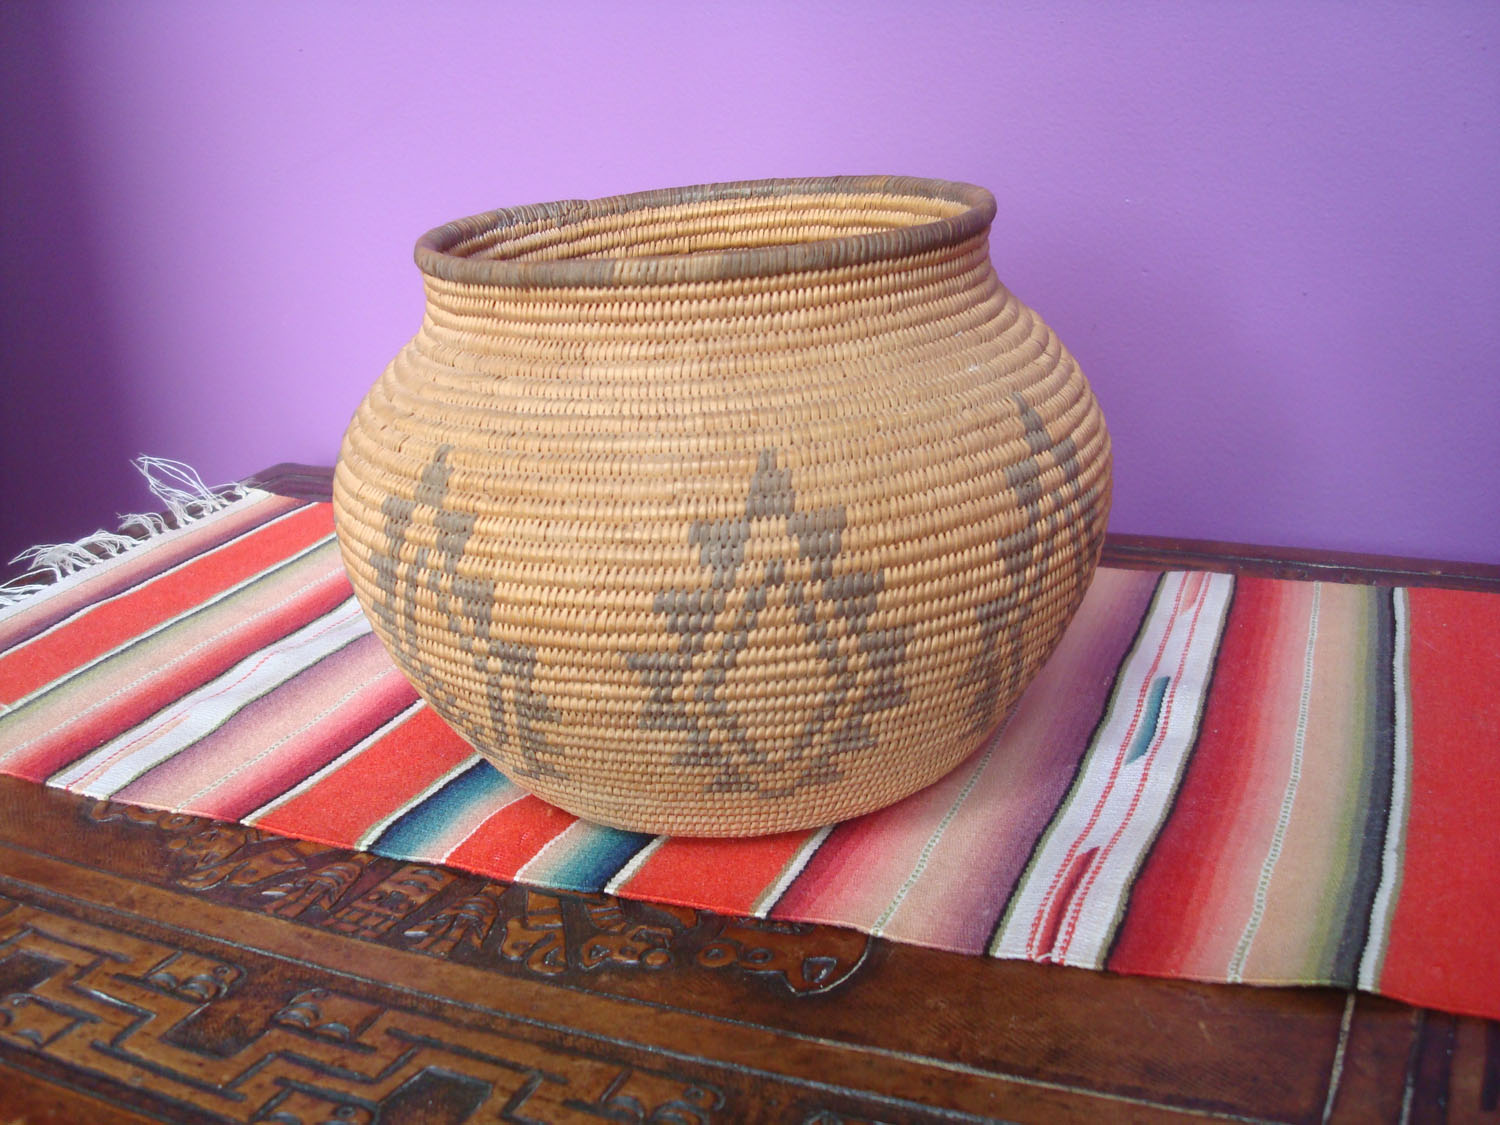 Baskets and basket-weaving